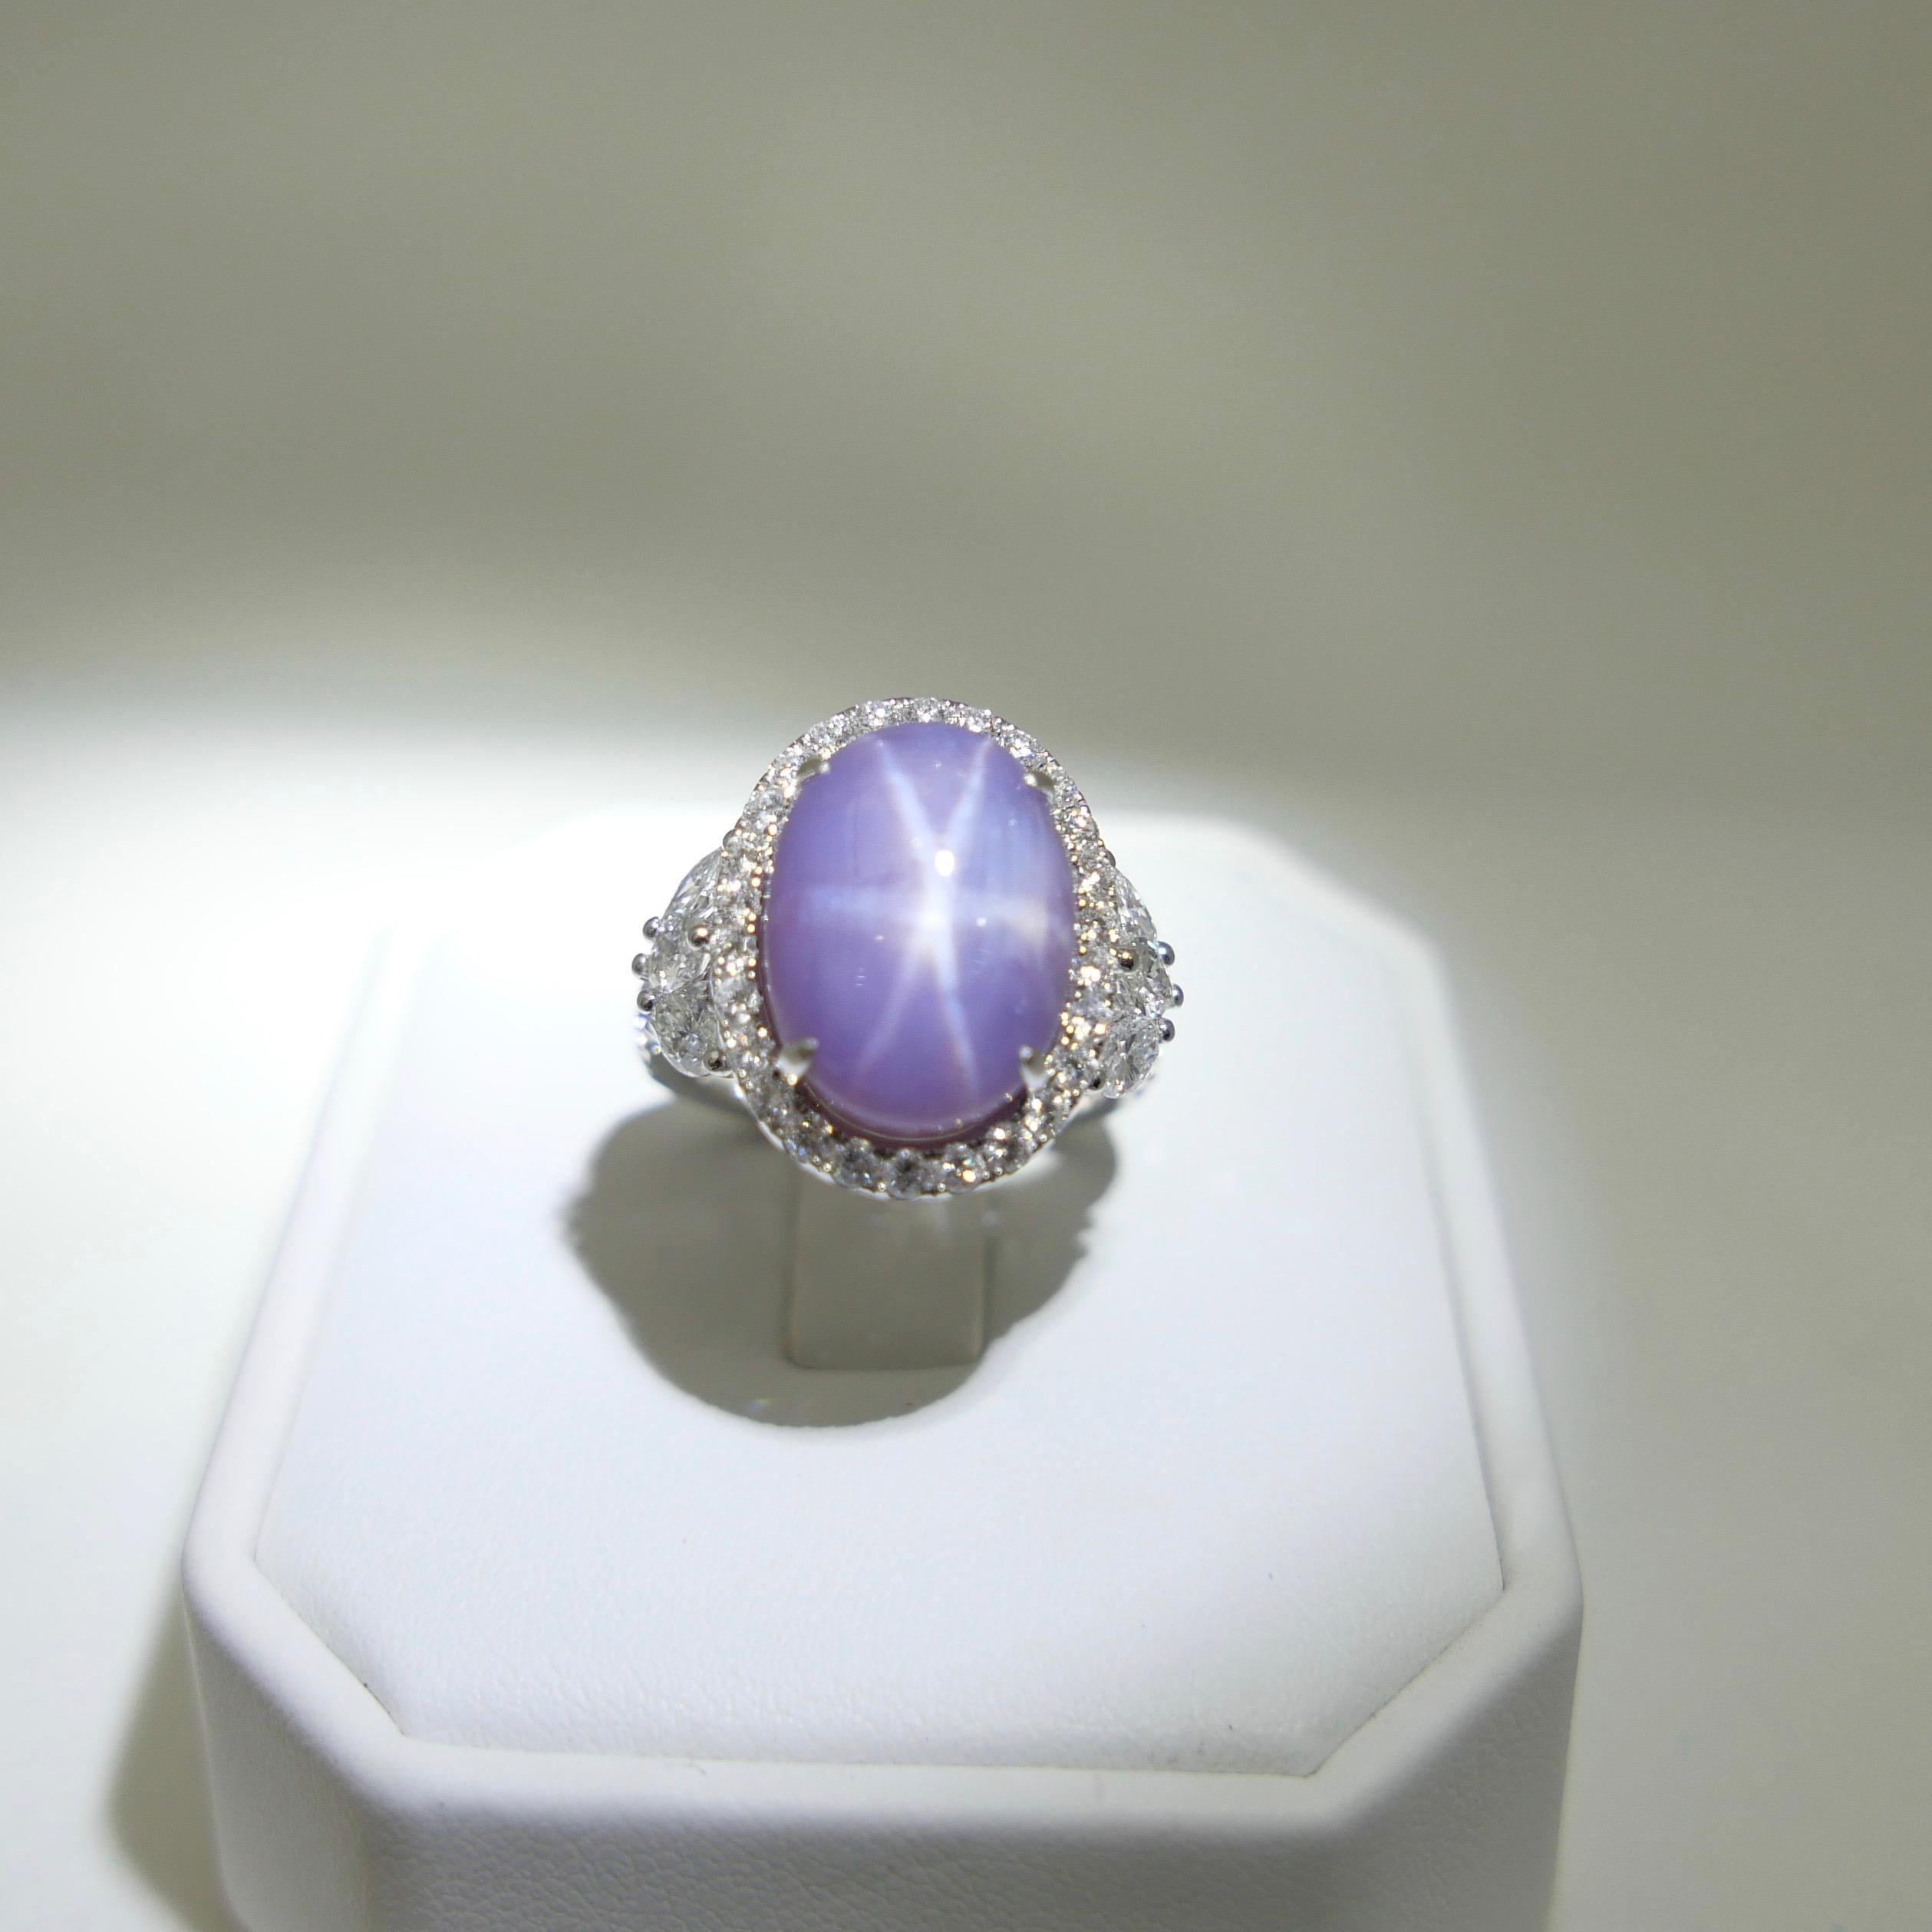 Oval Cut Certified Purple Star Sapphire 20.70 Carat Diamond Cocktail Ring, Statement Ring